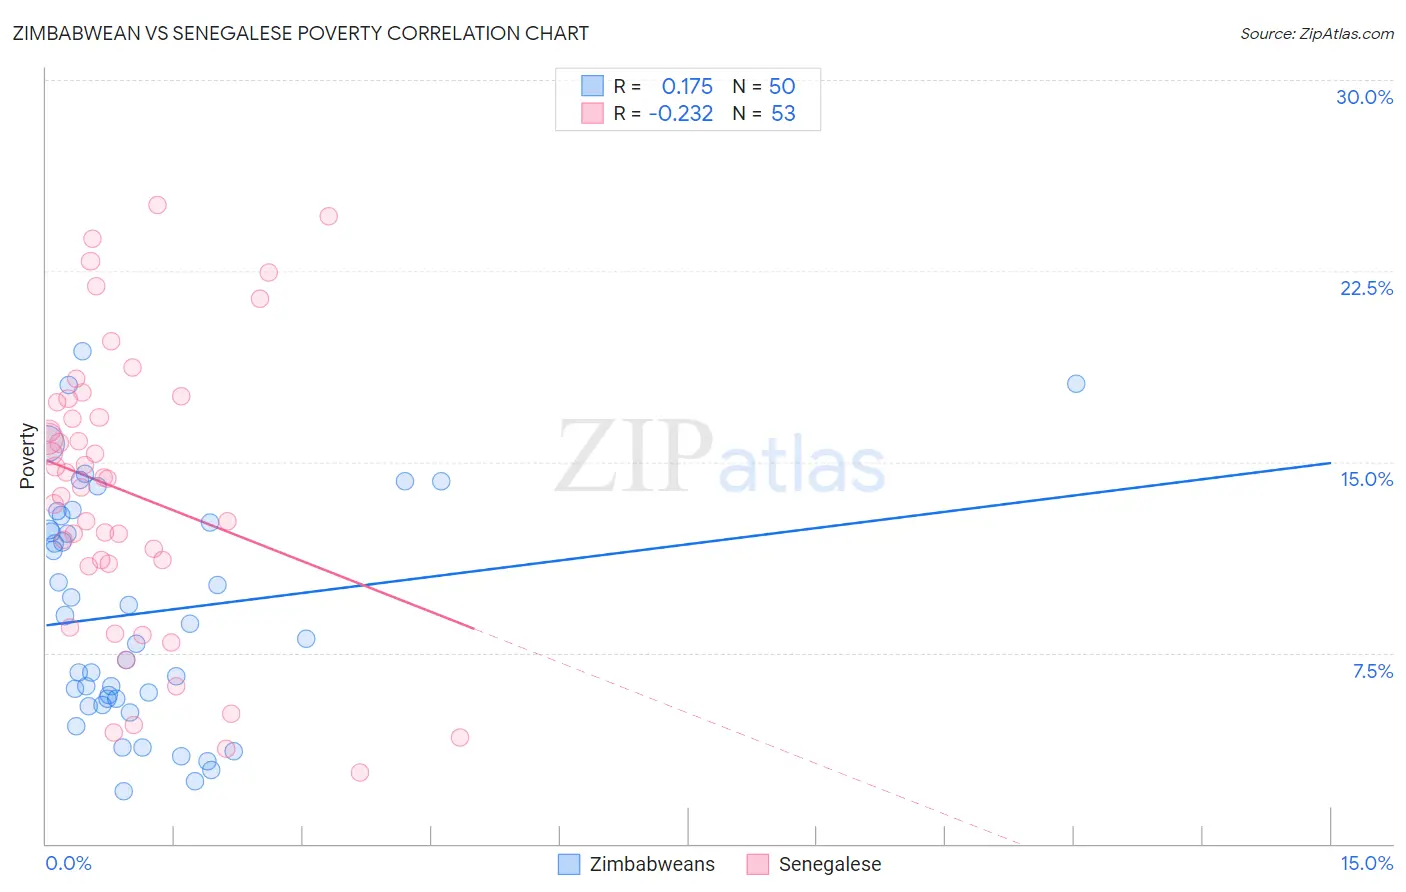 Zimbabwean vs Senegalese Poverty